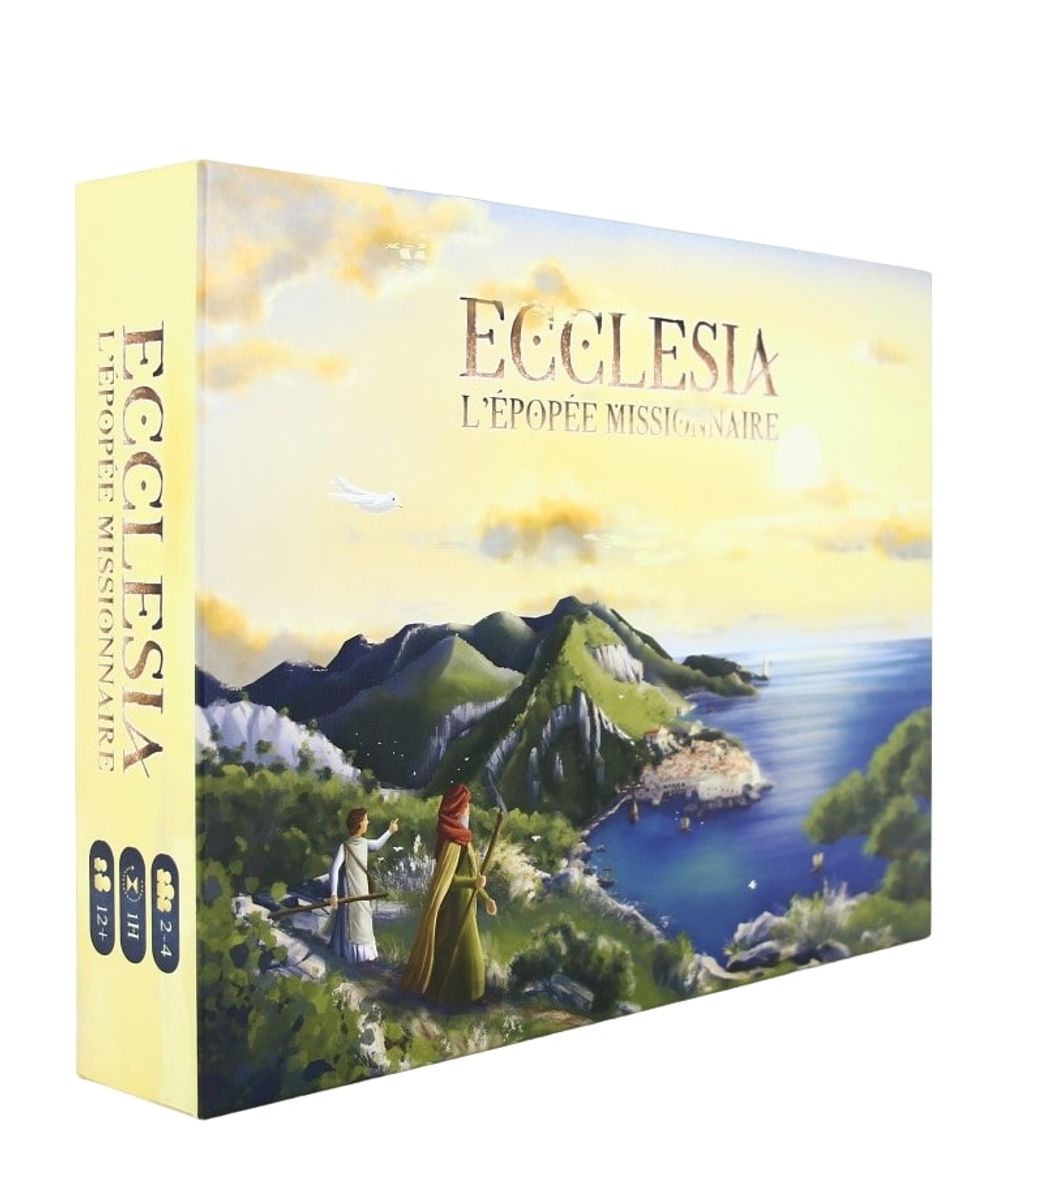 Ecclesia - l'epopee missionnaire - edition illustree